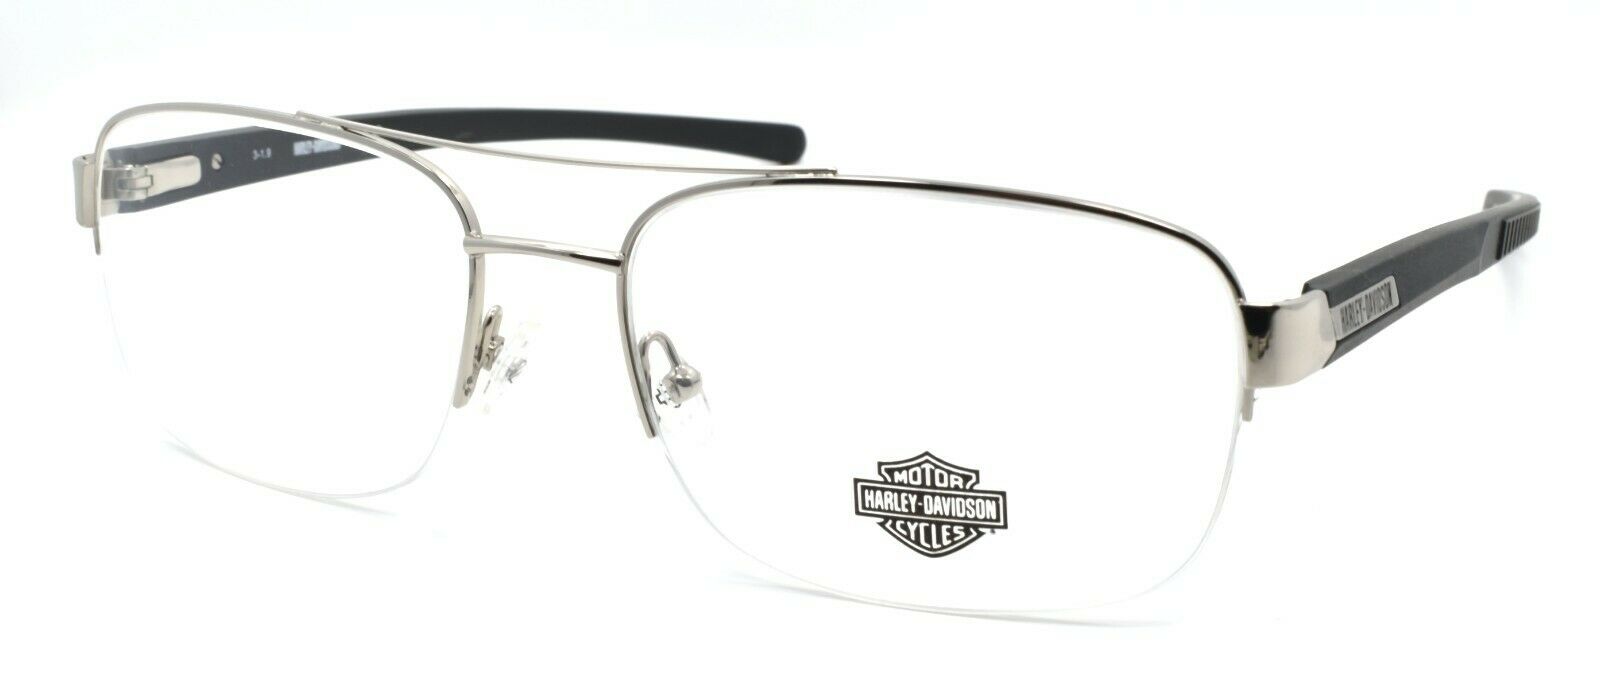 1-Harley Davidson HD0791 006 Men's Half-rim Eyeglasses LARGE 60-18-150 Nickeltin-889214047663-IKSpecs